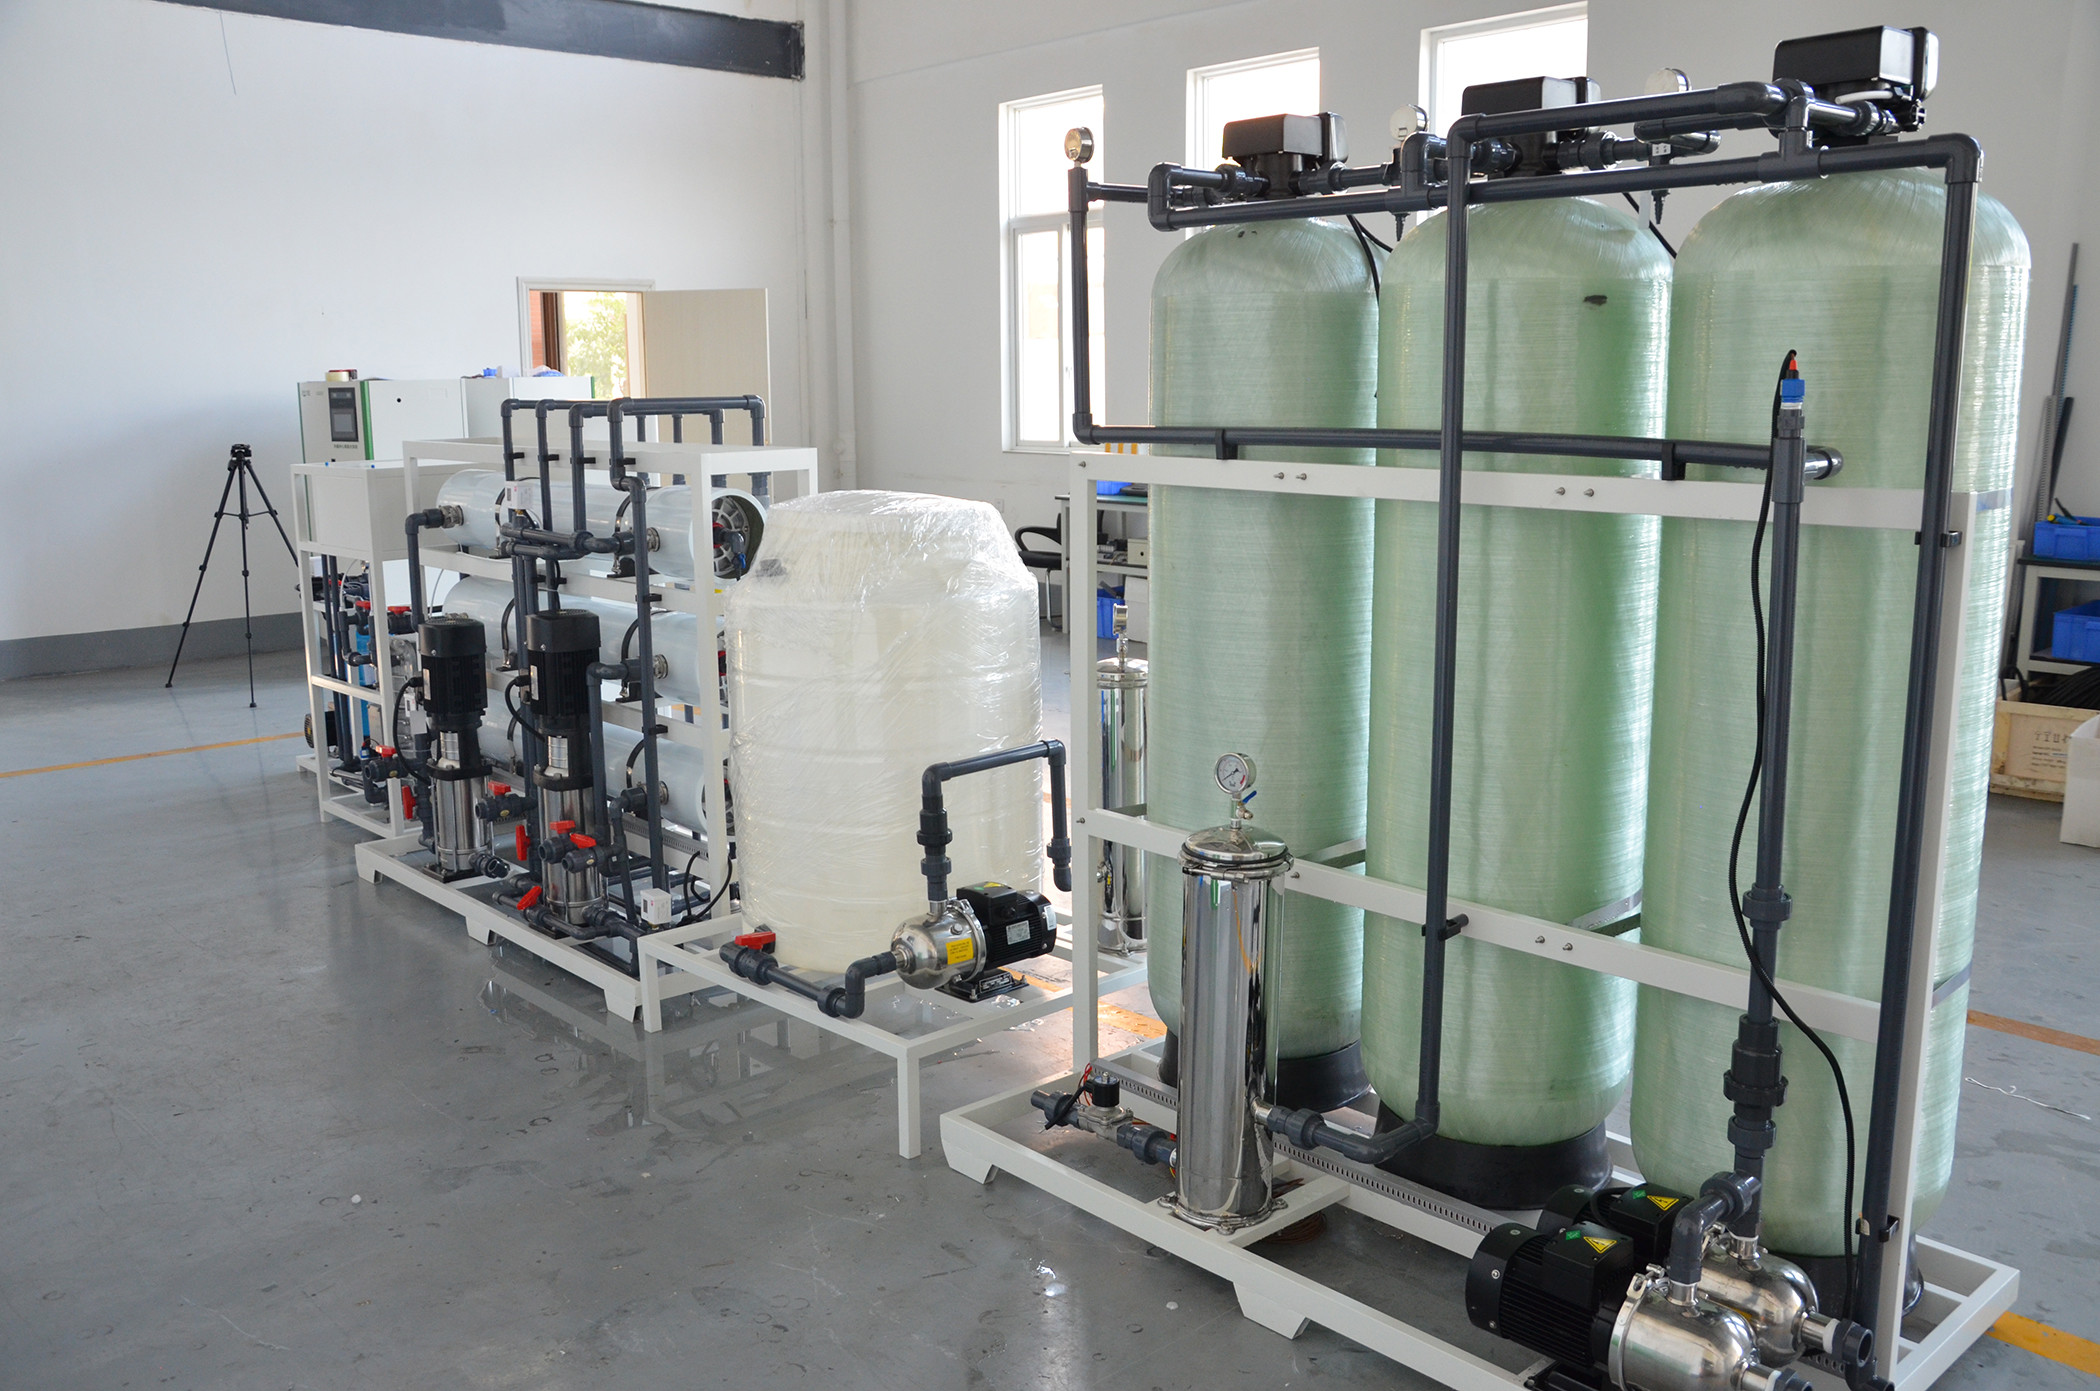 Cheap 2000LPH EDI System RO Water Purification Equipment UV Sterilization wholesale